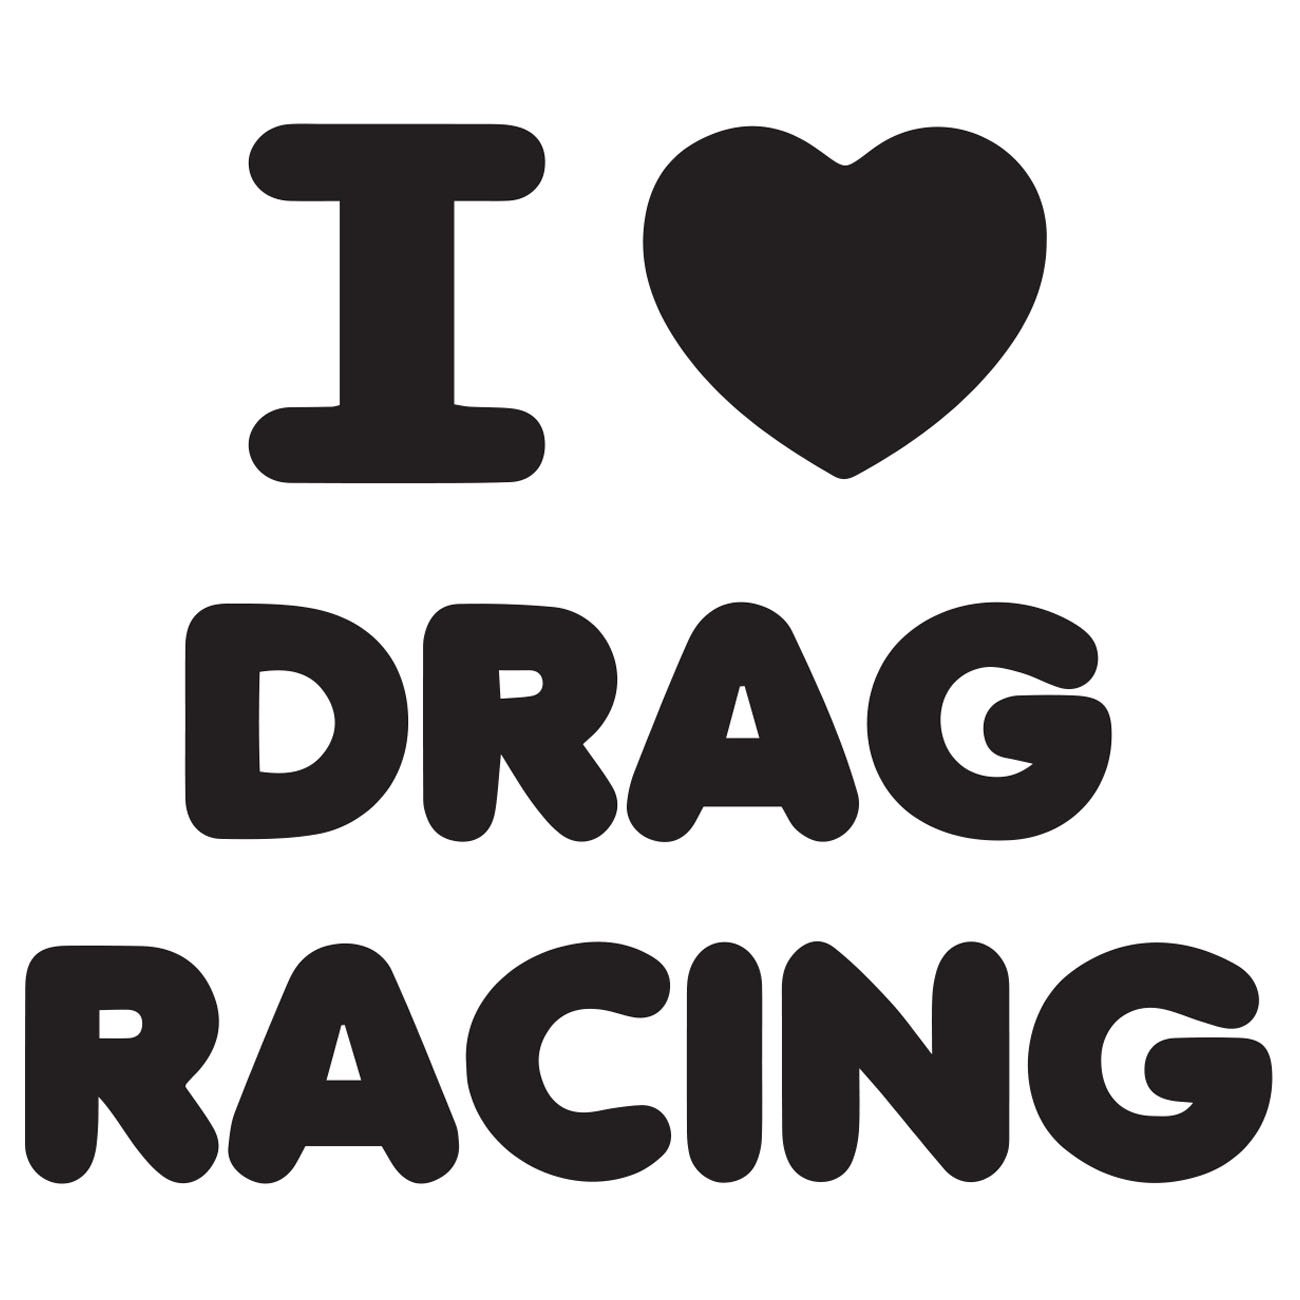 I Love drag racing